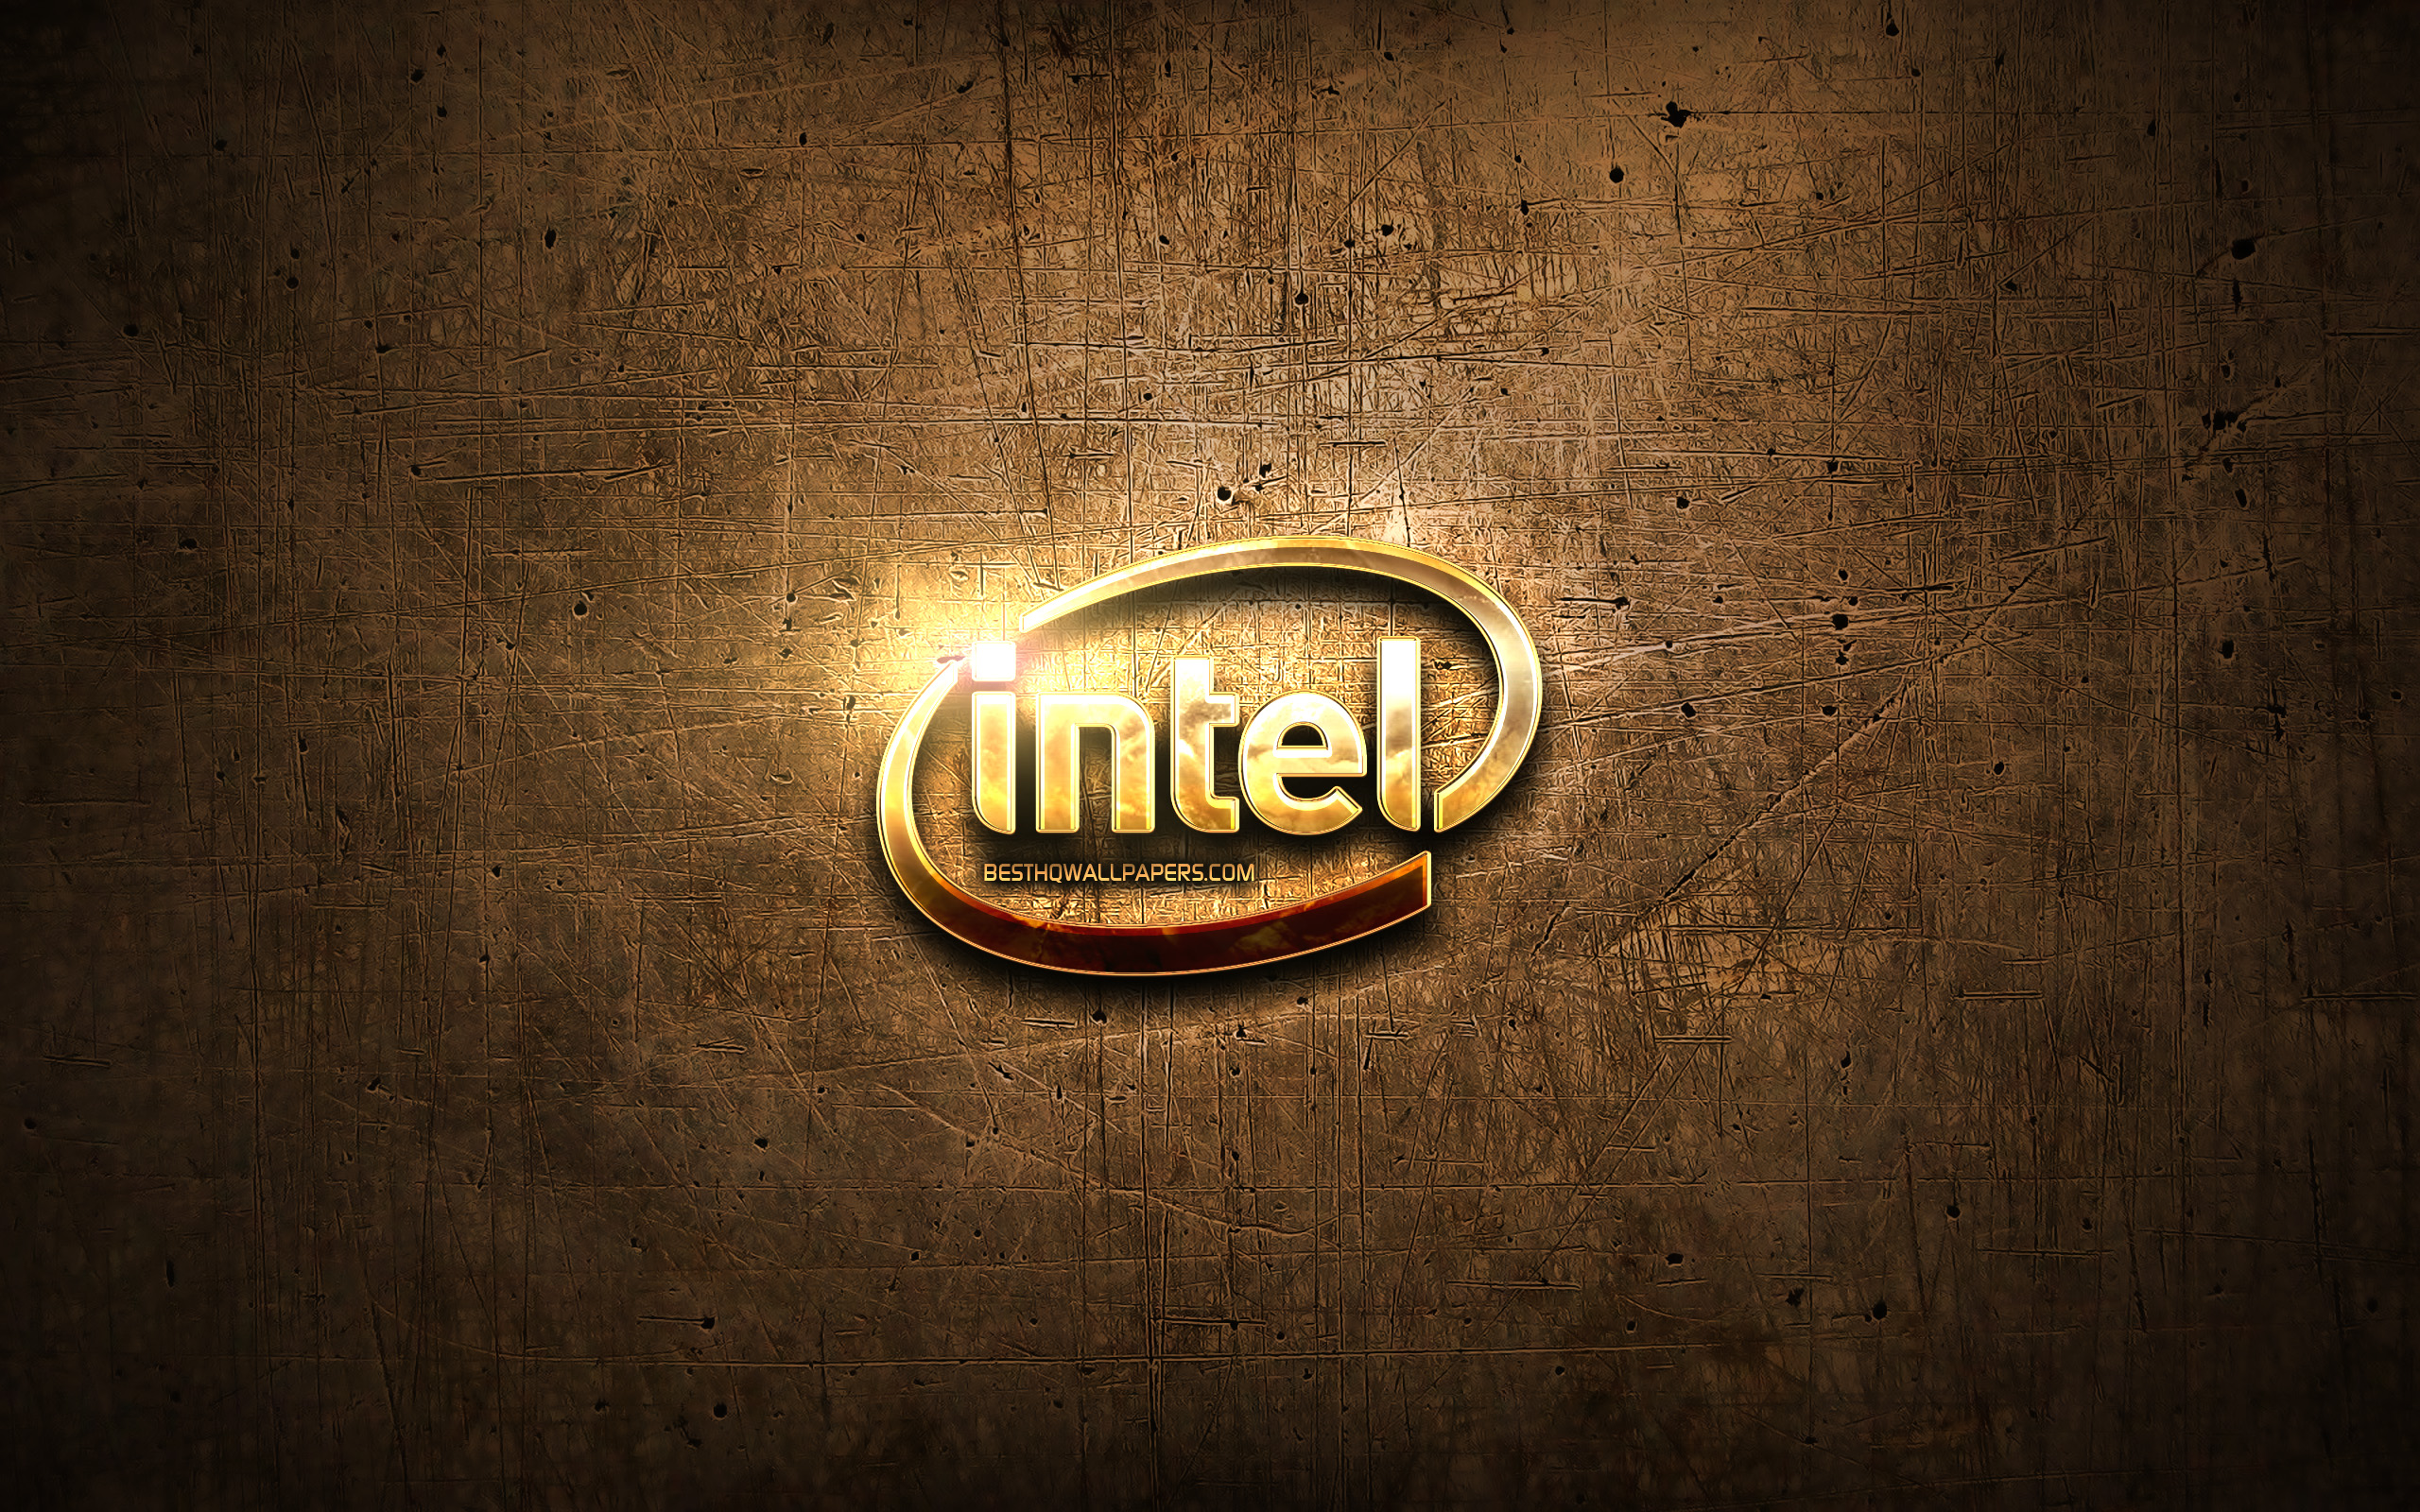 Download wallpaper Intel golden logo, artwork, brown metal background, creative, Intel logo, brands, Intel for desktop with resolution 2560x1600. High Quality HD picture wallpaper